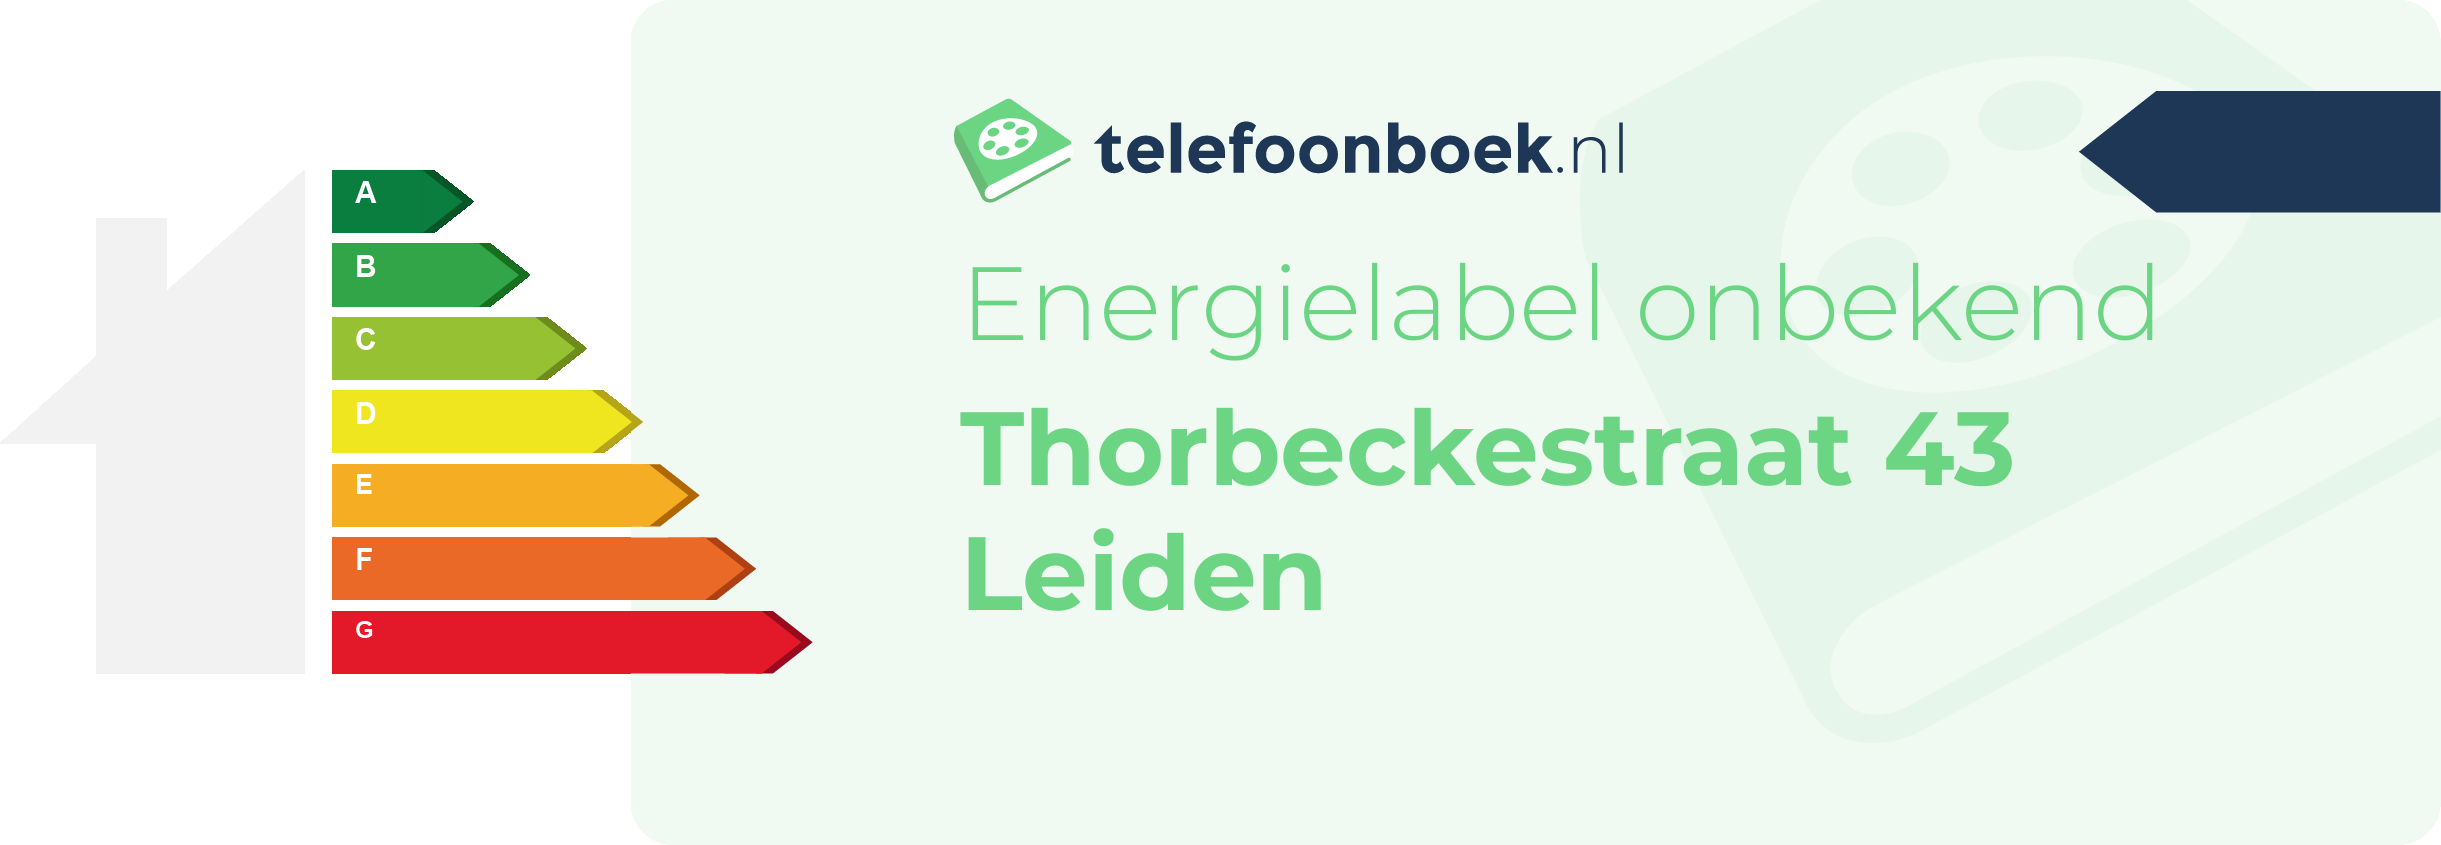 Energielabel Thorbeckestraat 43 Leiden